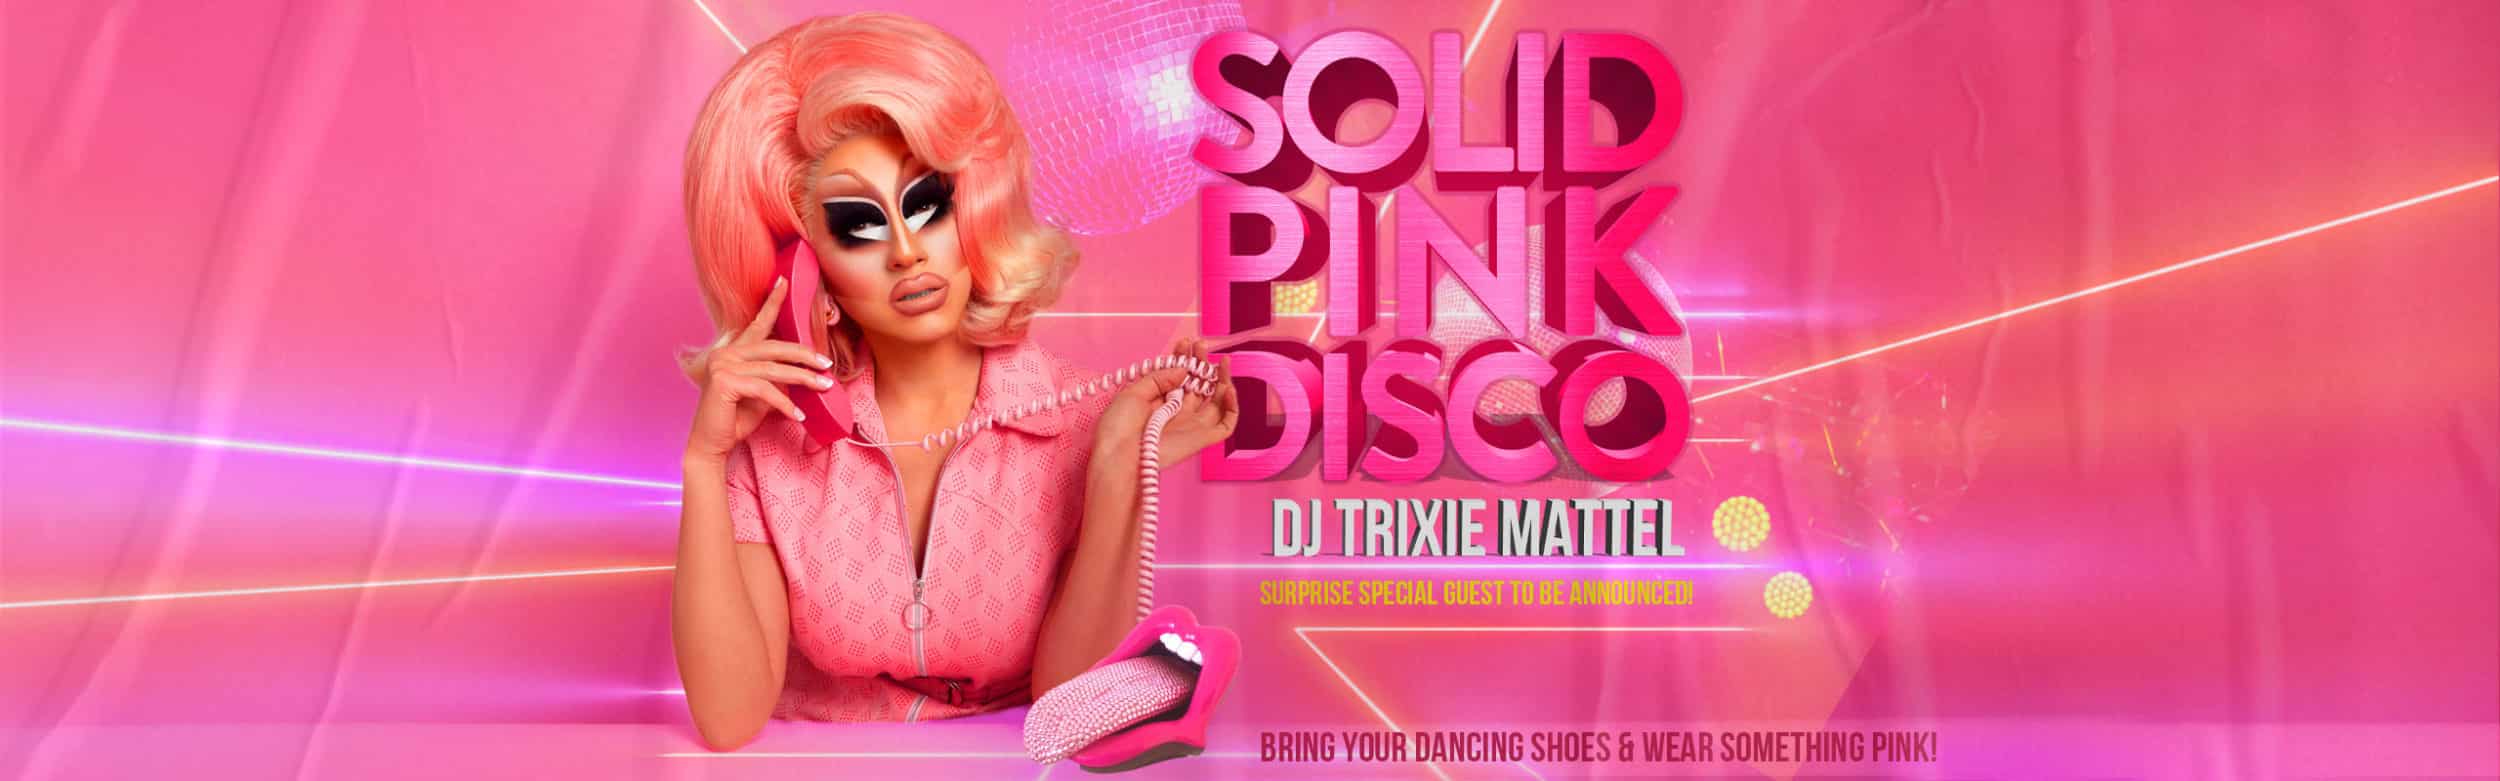 DJ Trixie Mattel – Solid Pink Disco